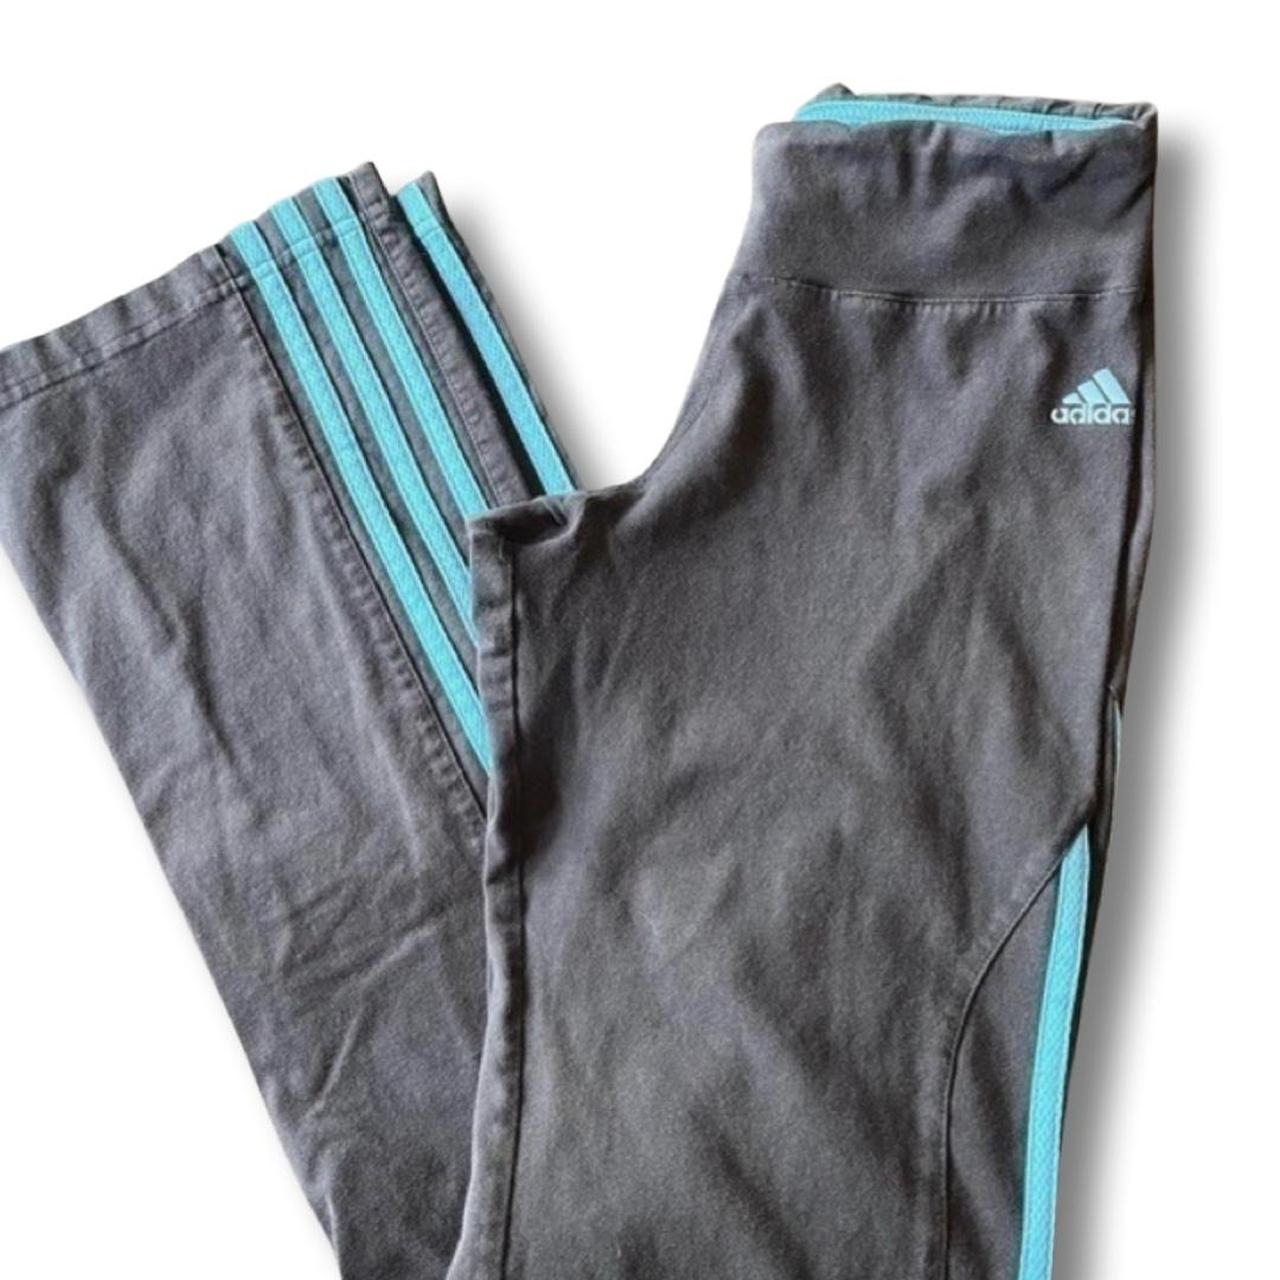 Product Image 1 - Adidas Sweatpants. 2010. Black fade